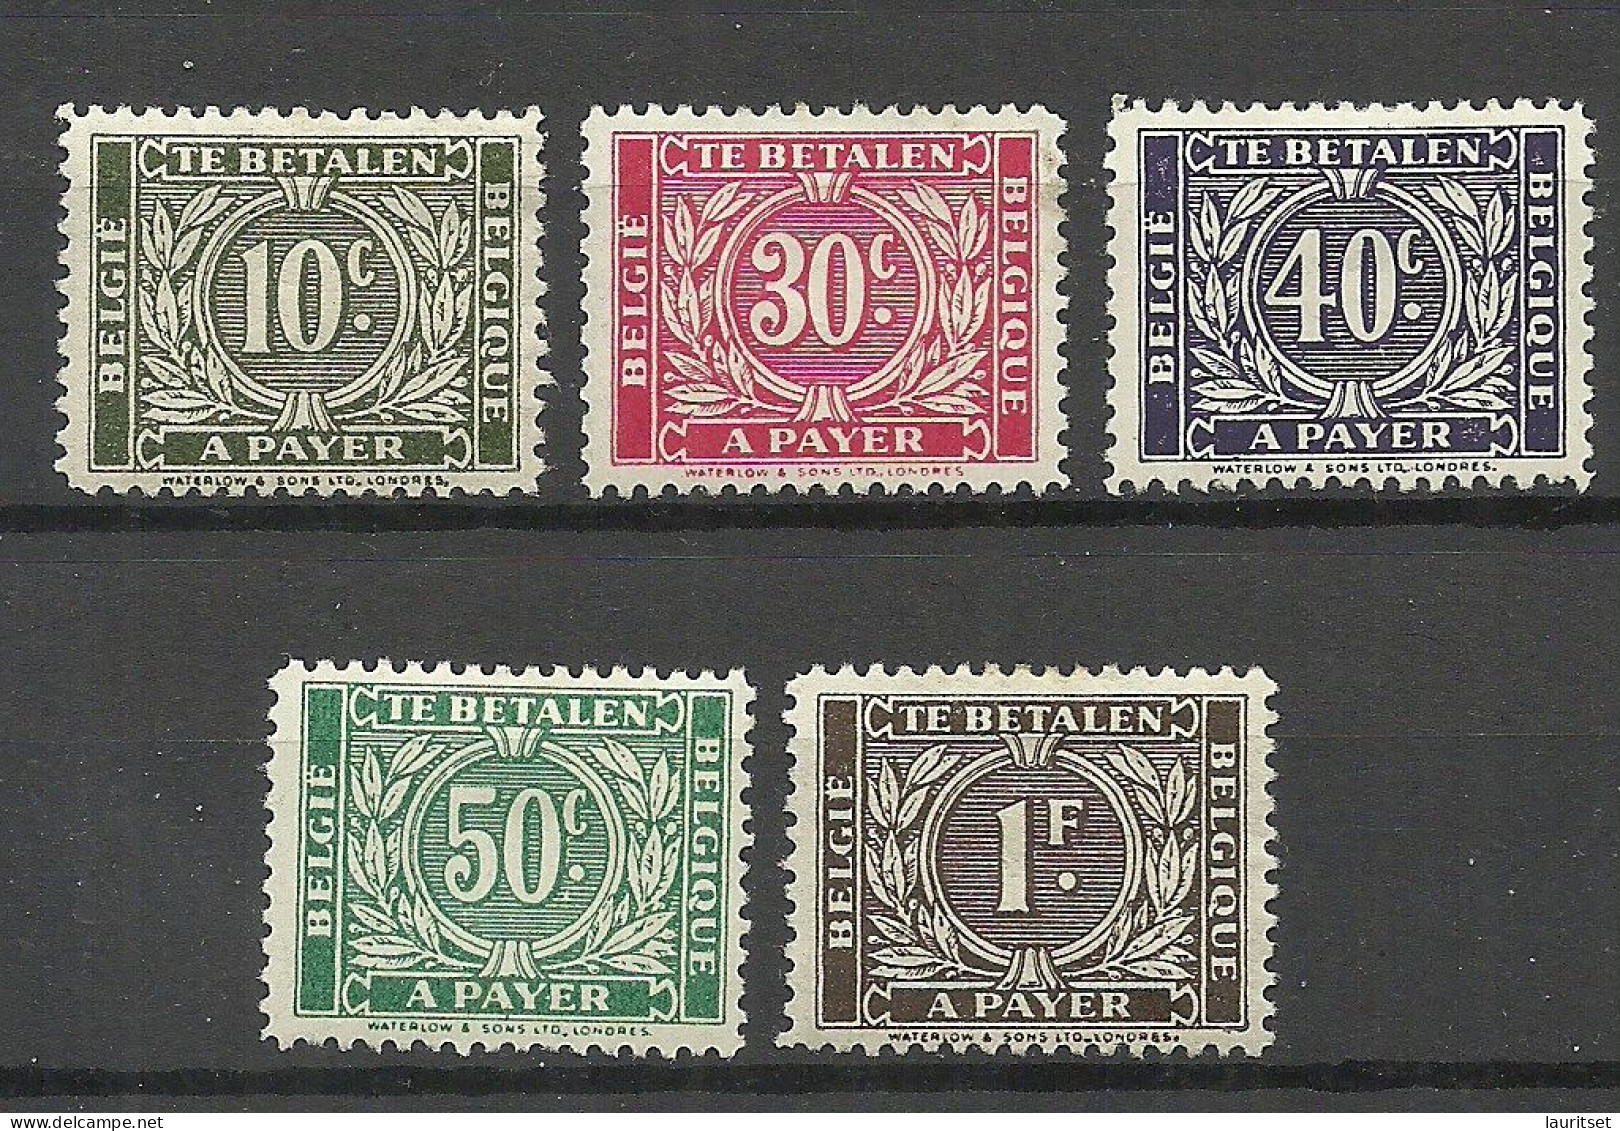 BELGIEN Belgium Belgique 1945 =5 Values From Set Michel 49 - 45 A Payer Te Betalen Portomarken Postage Due * - Francobolli